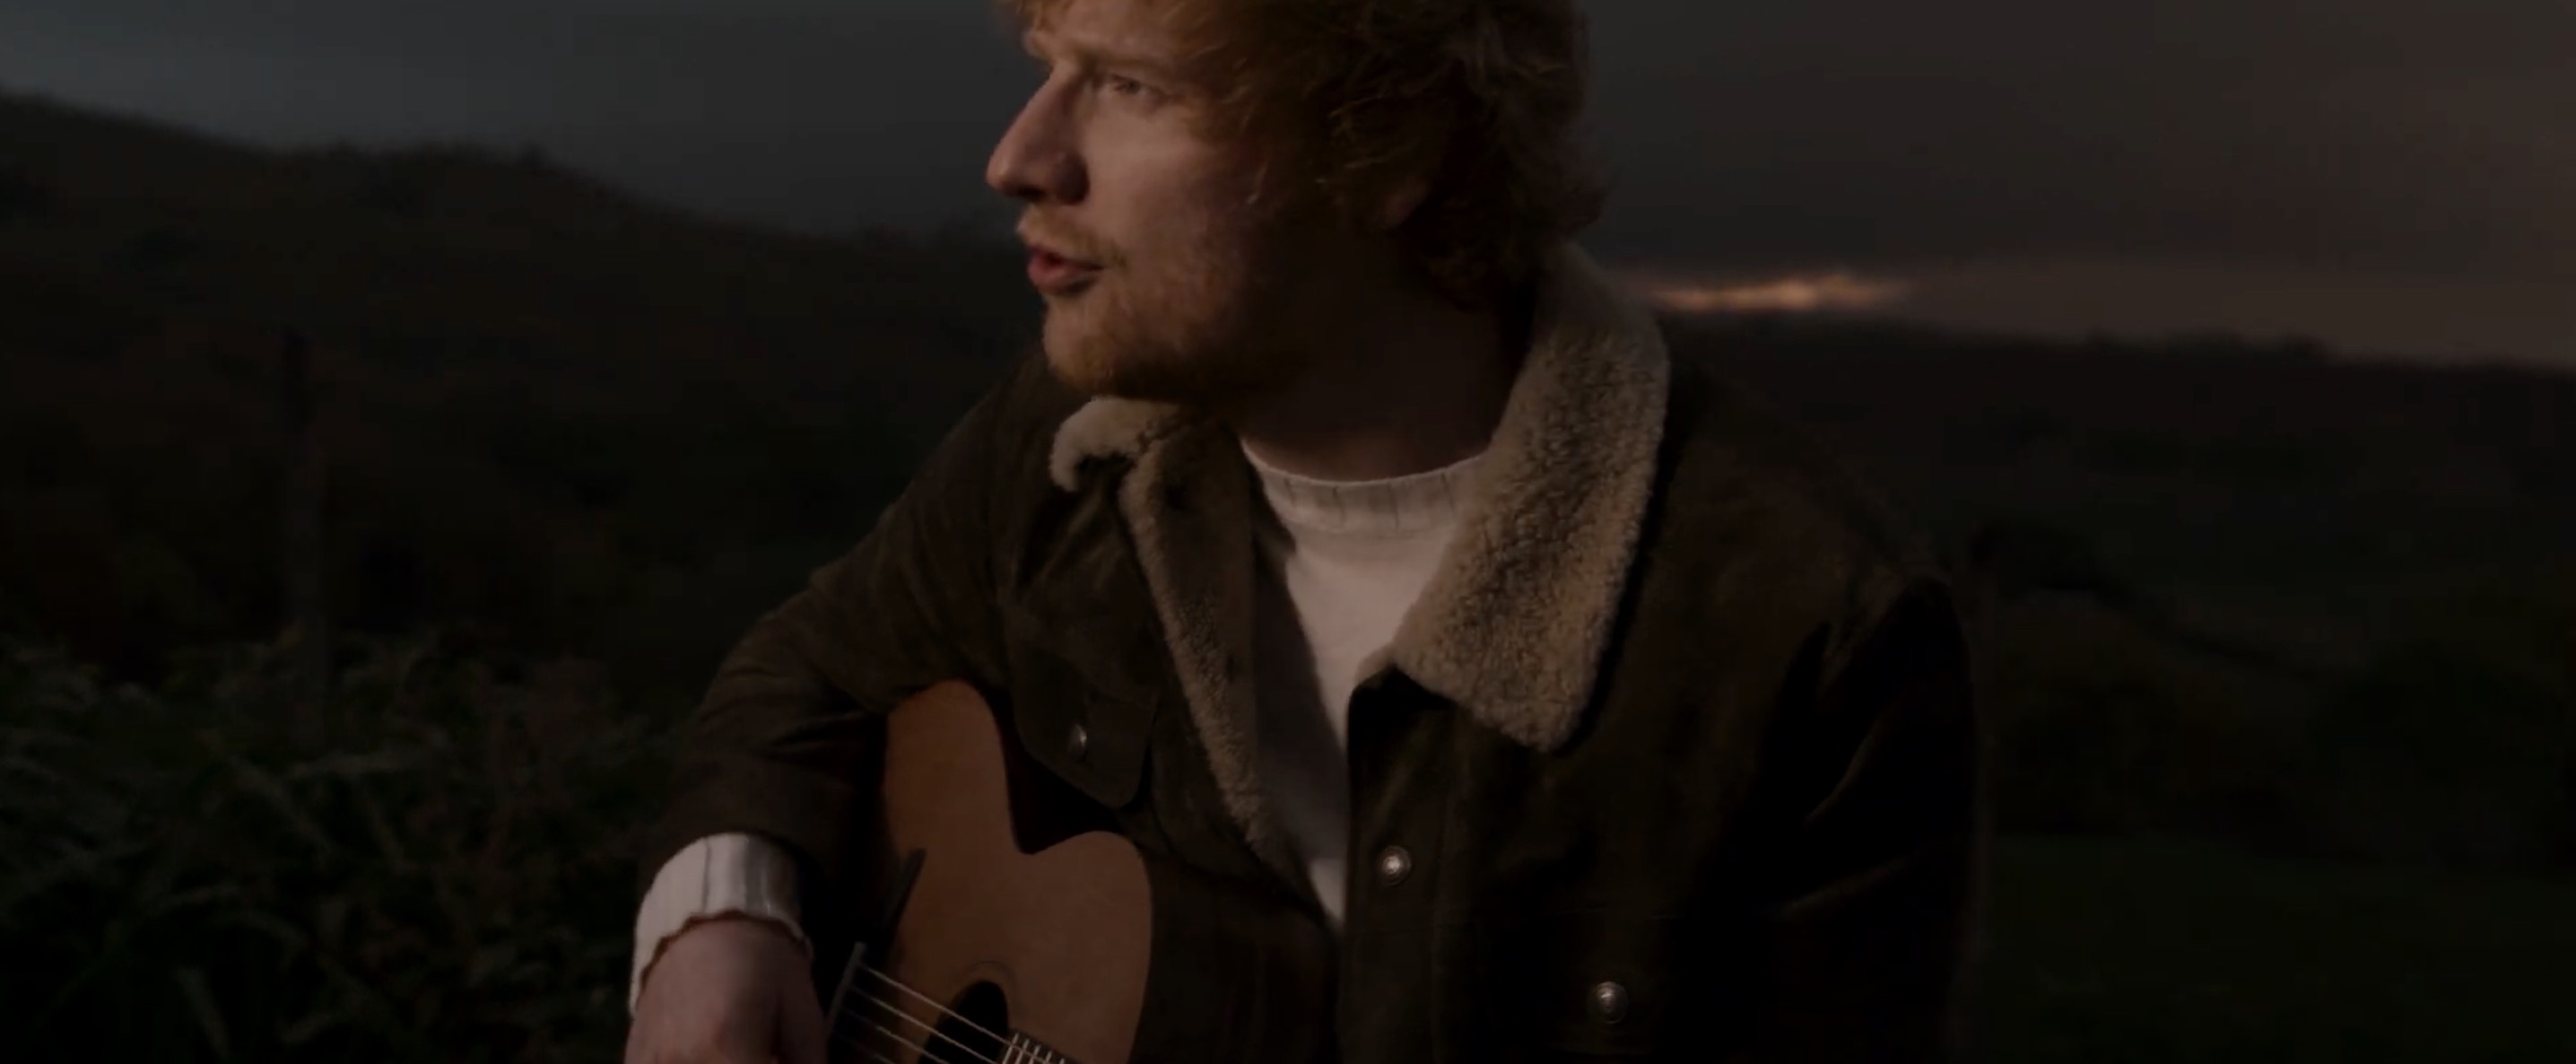 Ed sheeran - Afterglow -